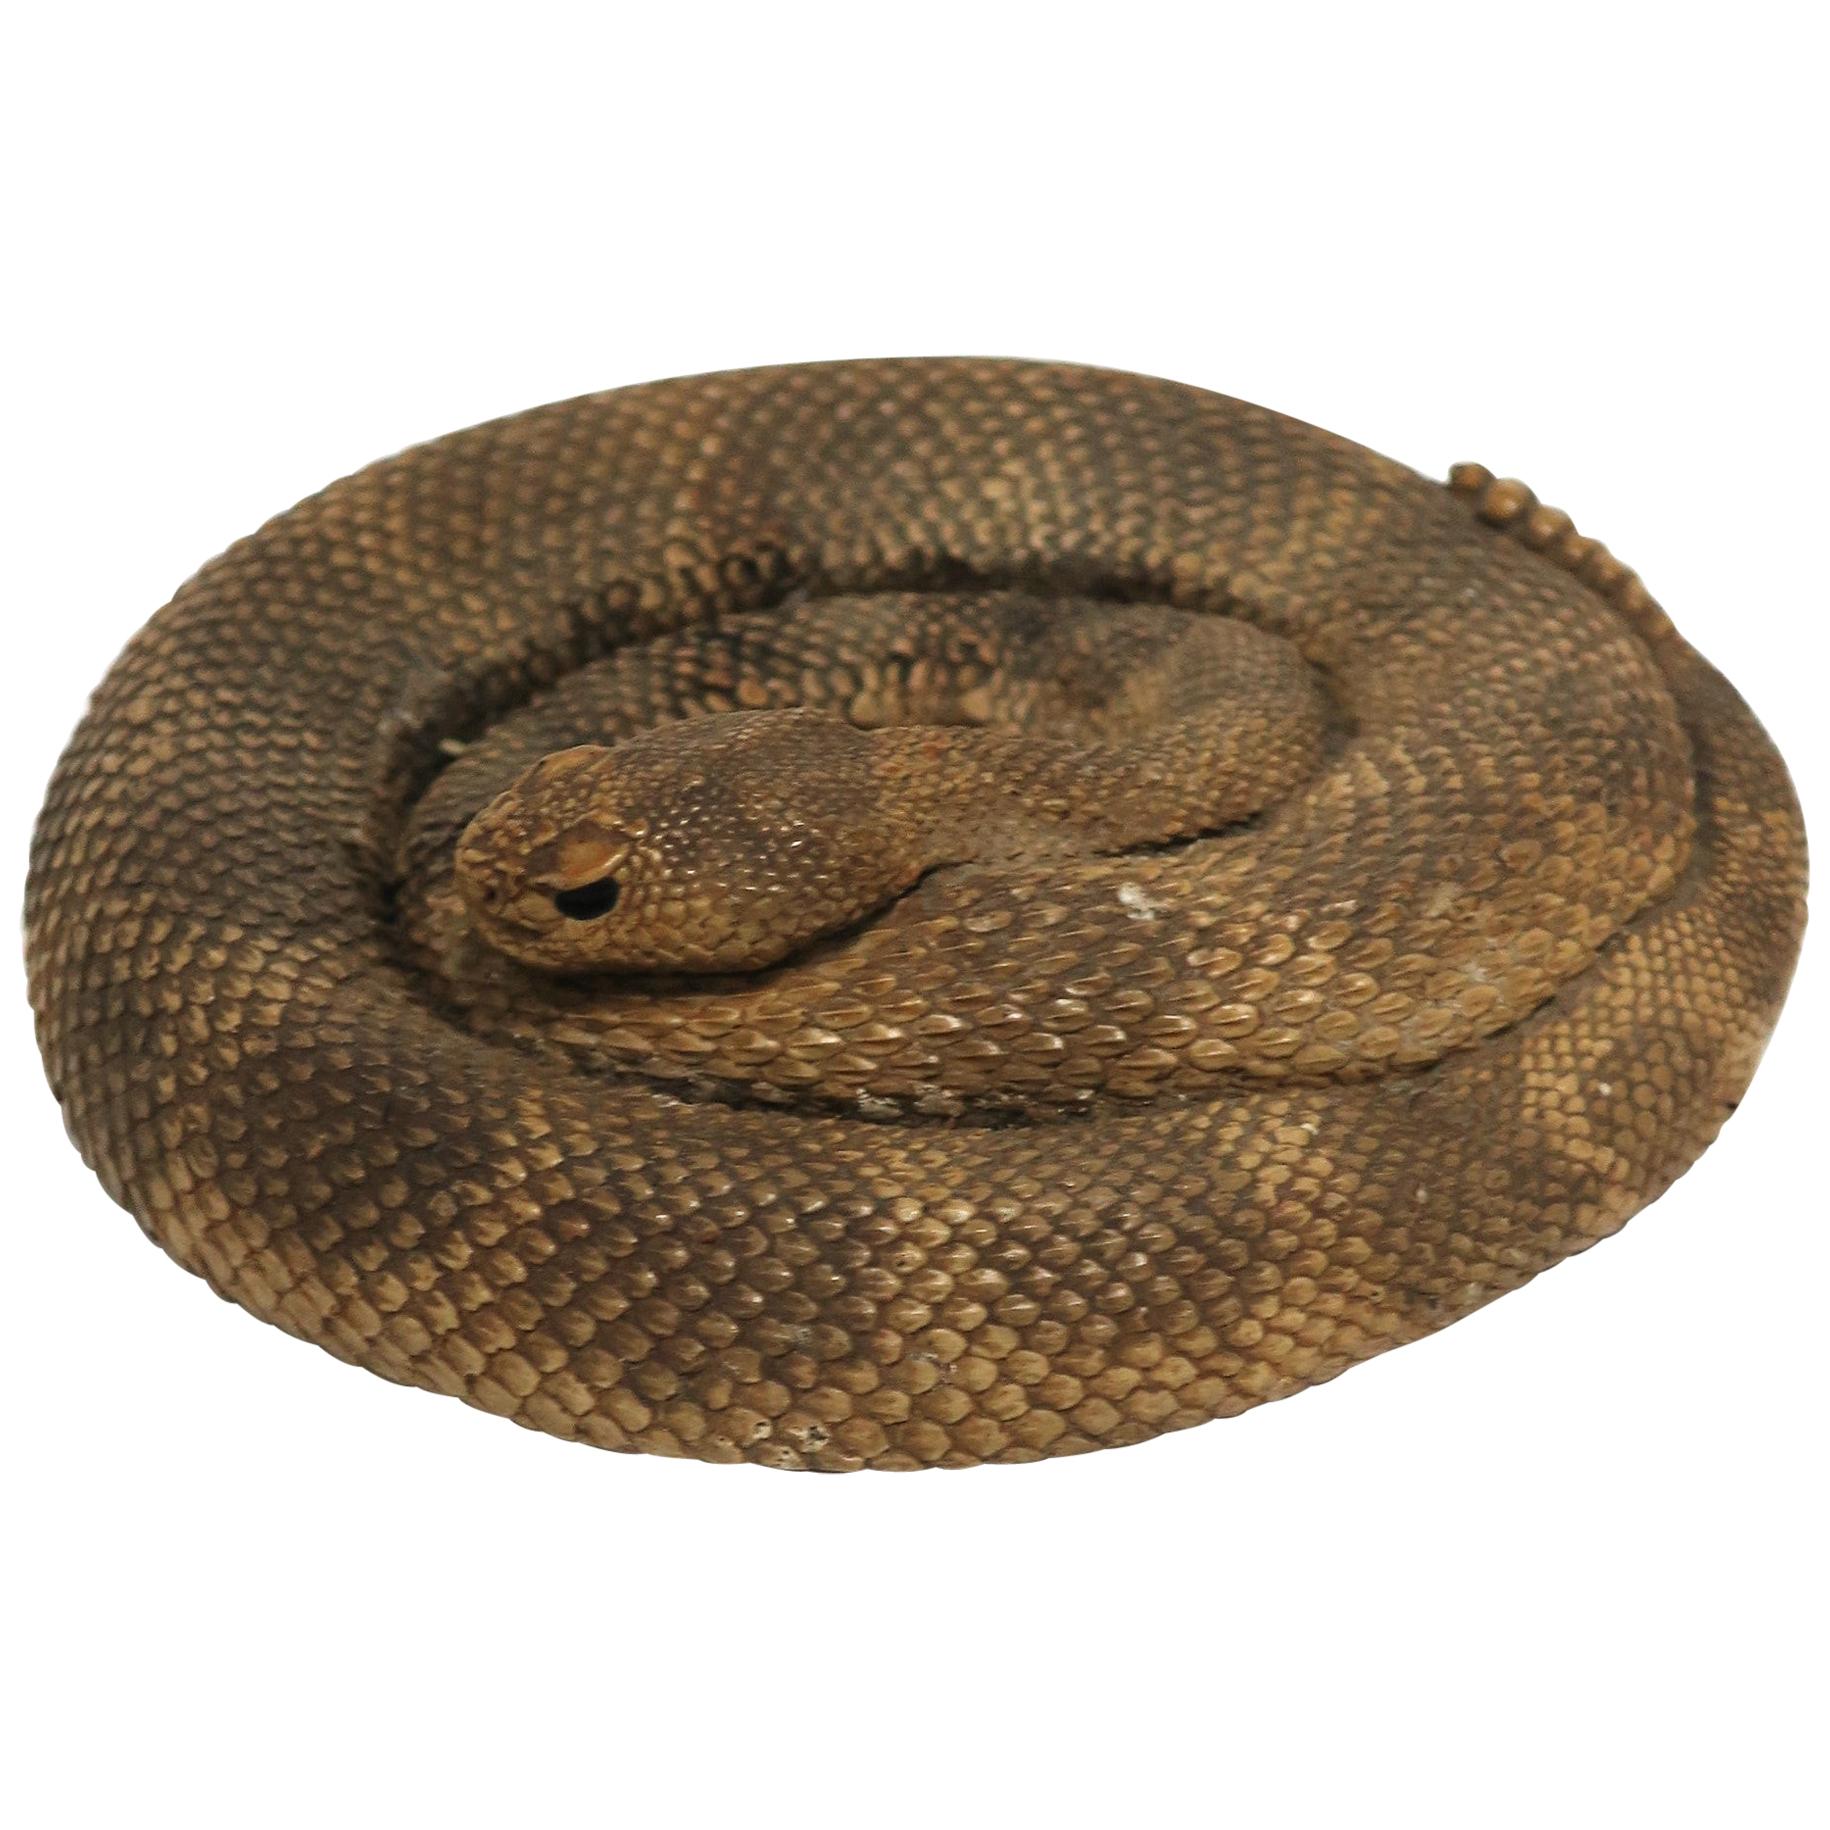 Coiled Rattle Snake, circa 1980s USA